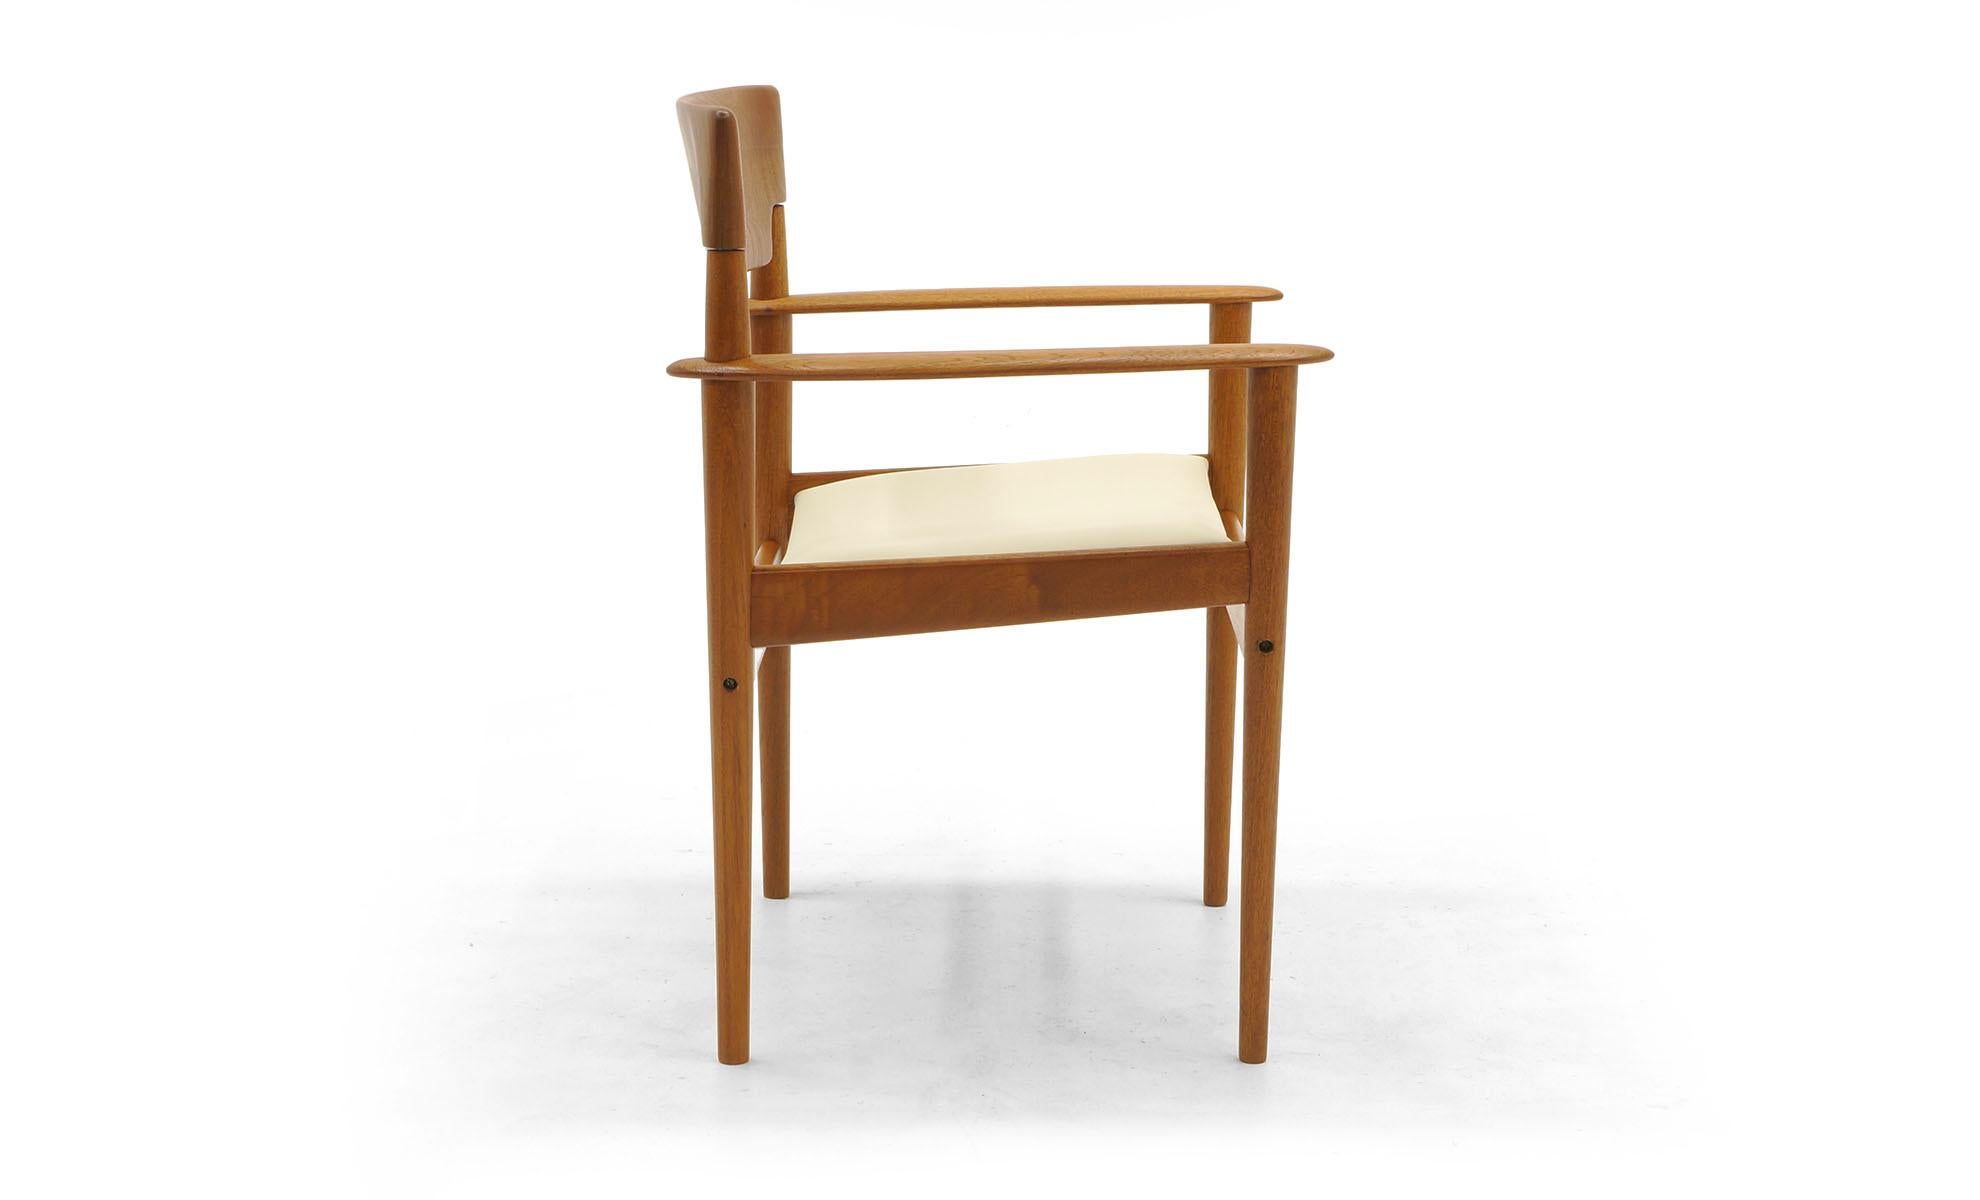 Armchair designed by Grete Jalk (Greta Jalk), Denmark, 1950s. Solid teak frame has been reupholstered in new ivory leather.